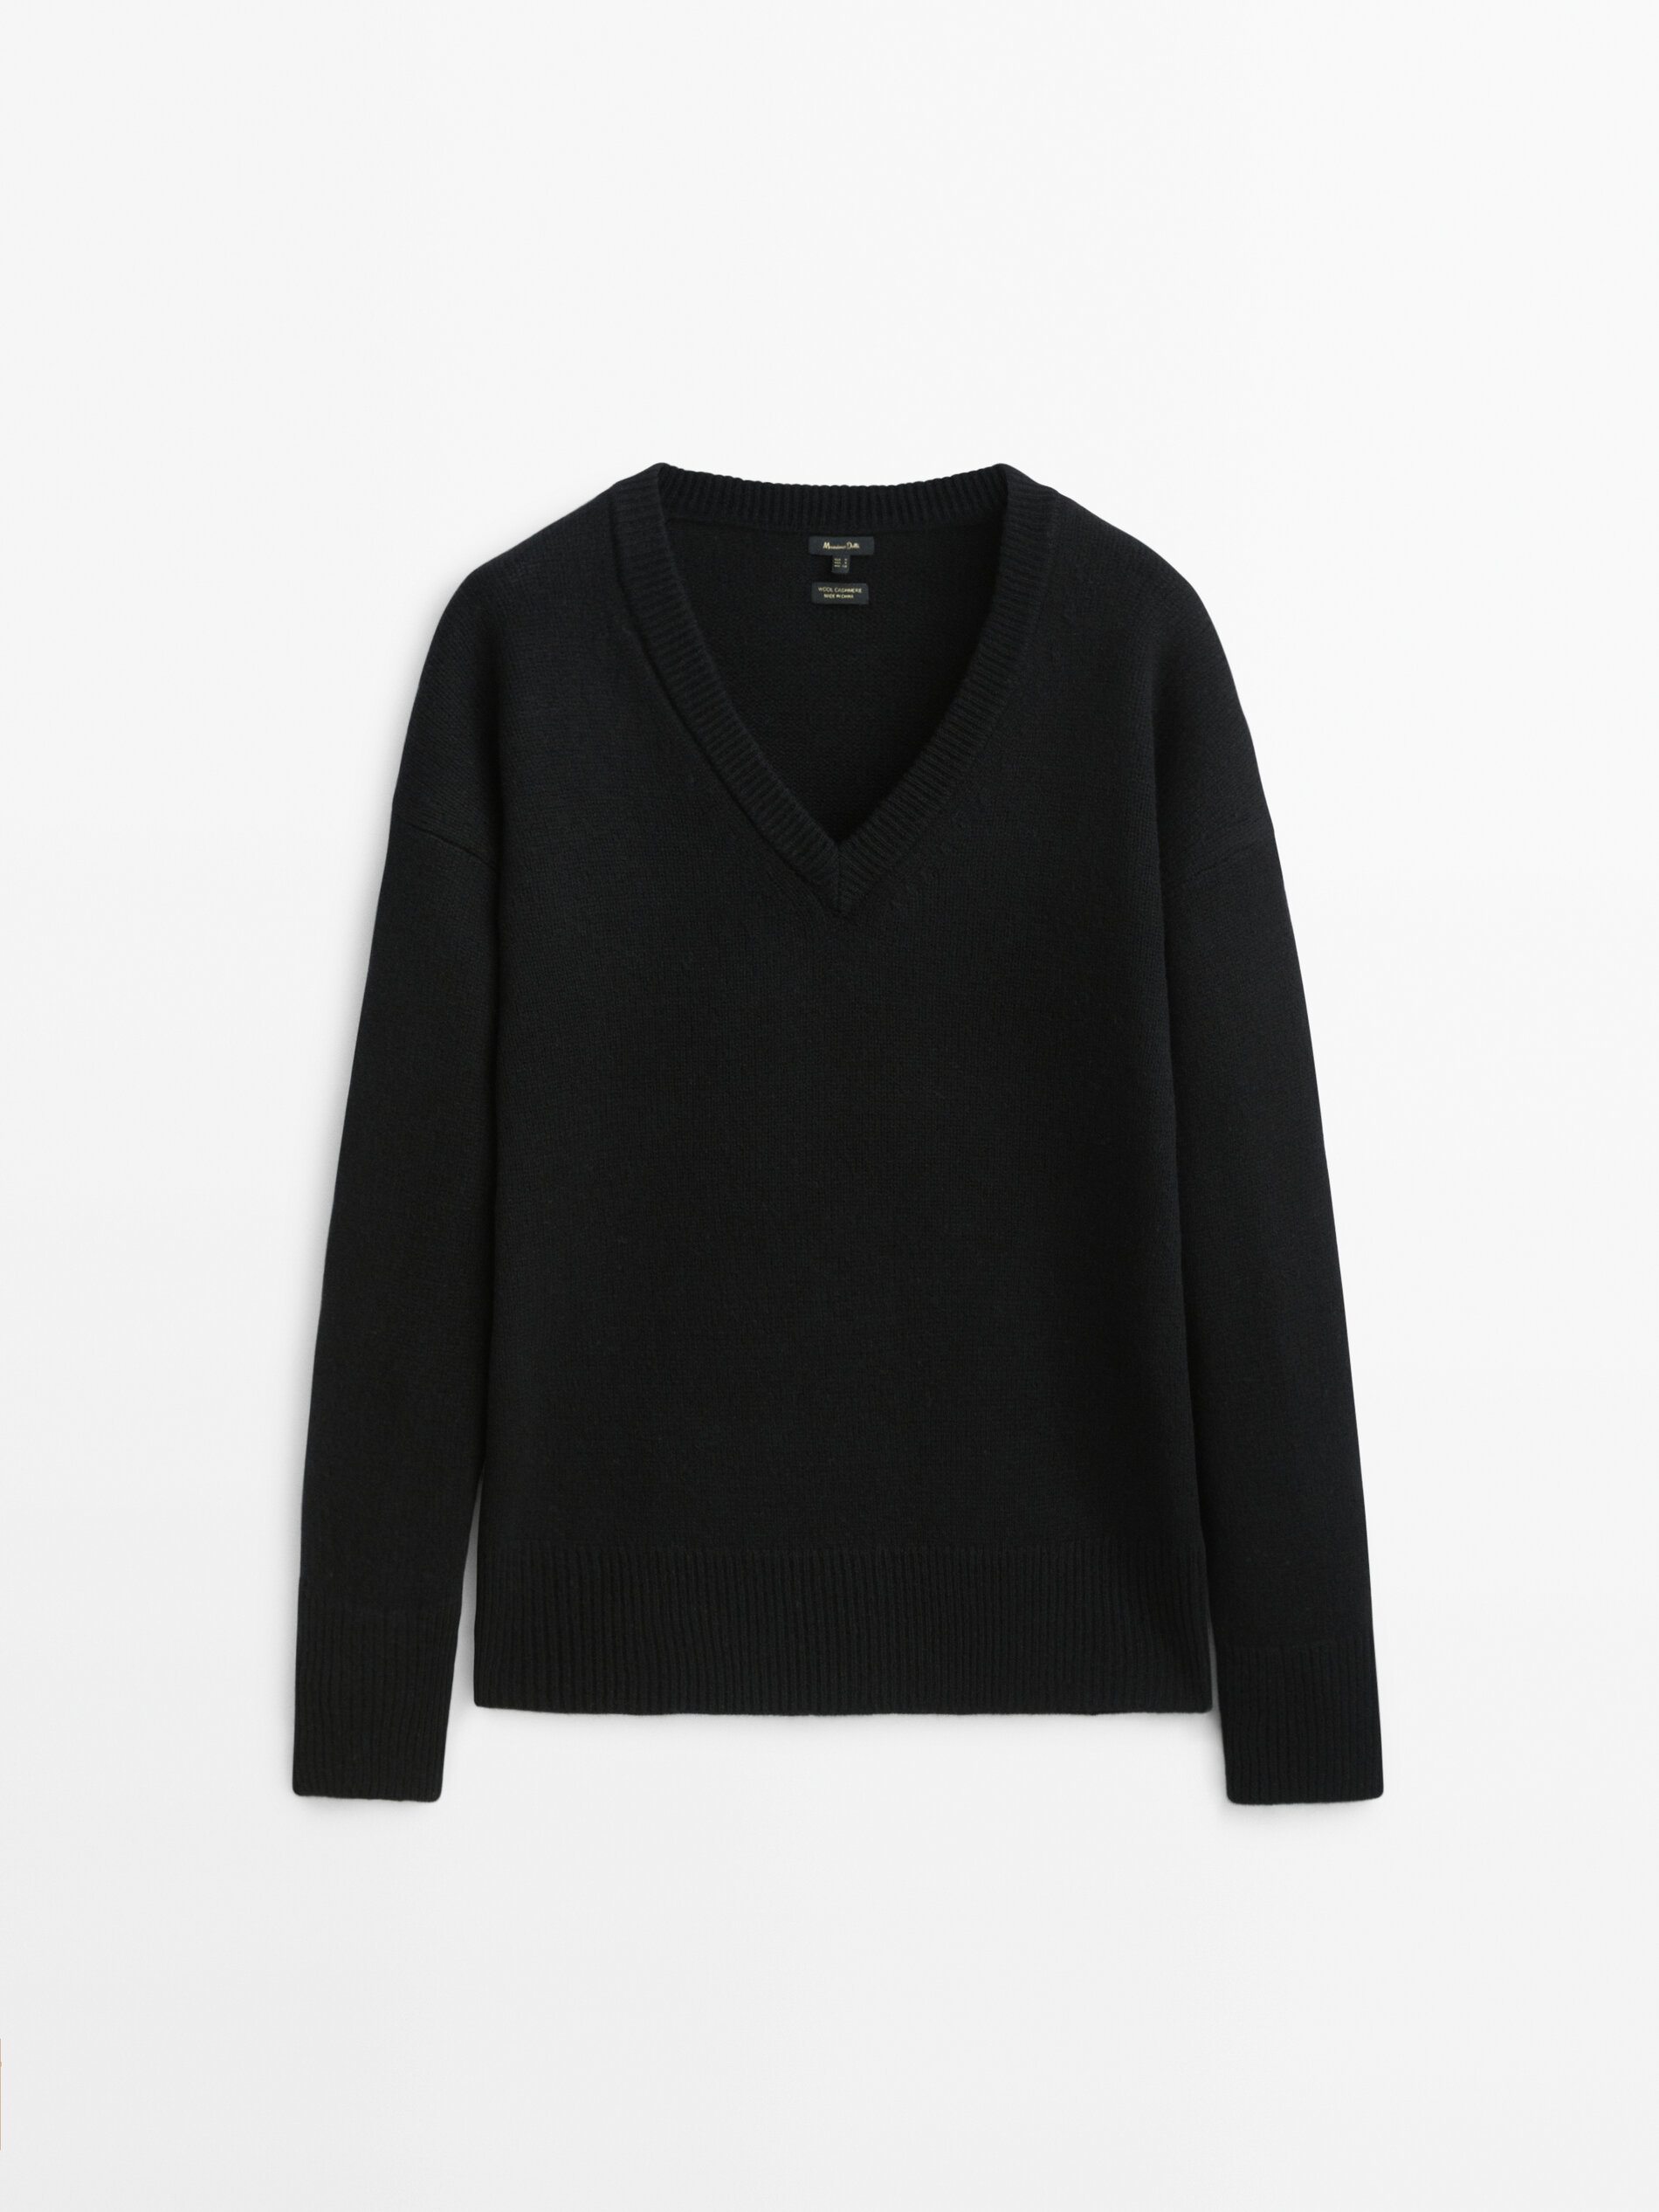 Jersey negro de pico, de Massimo Dutti.